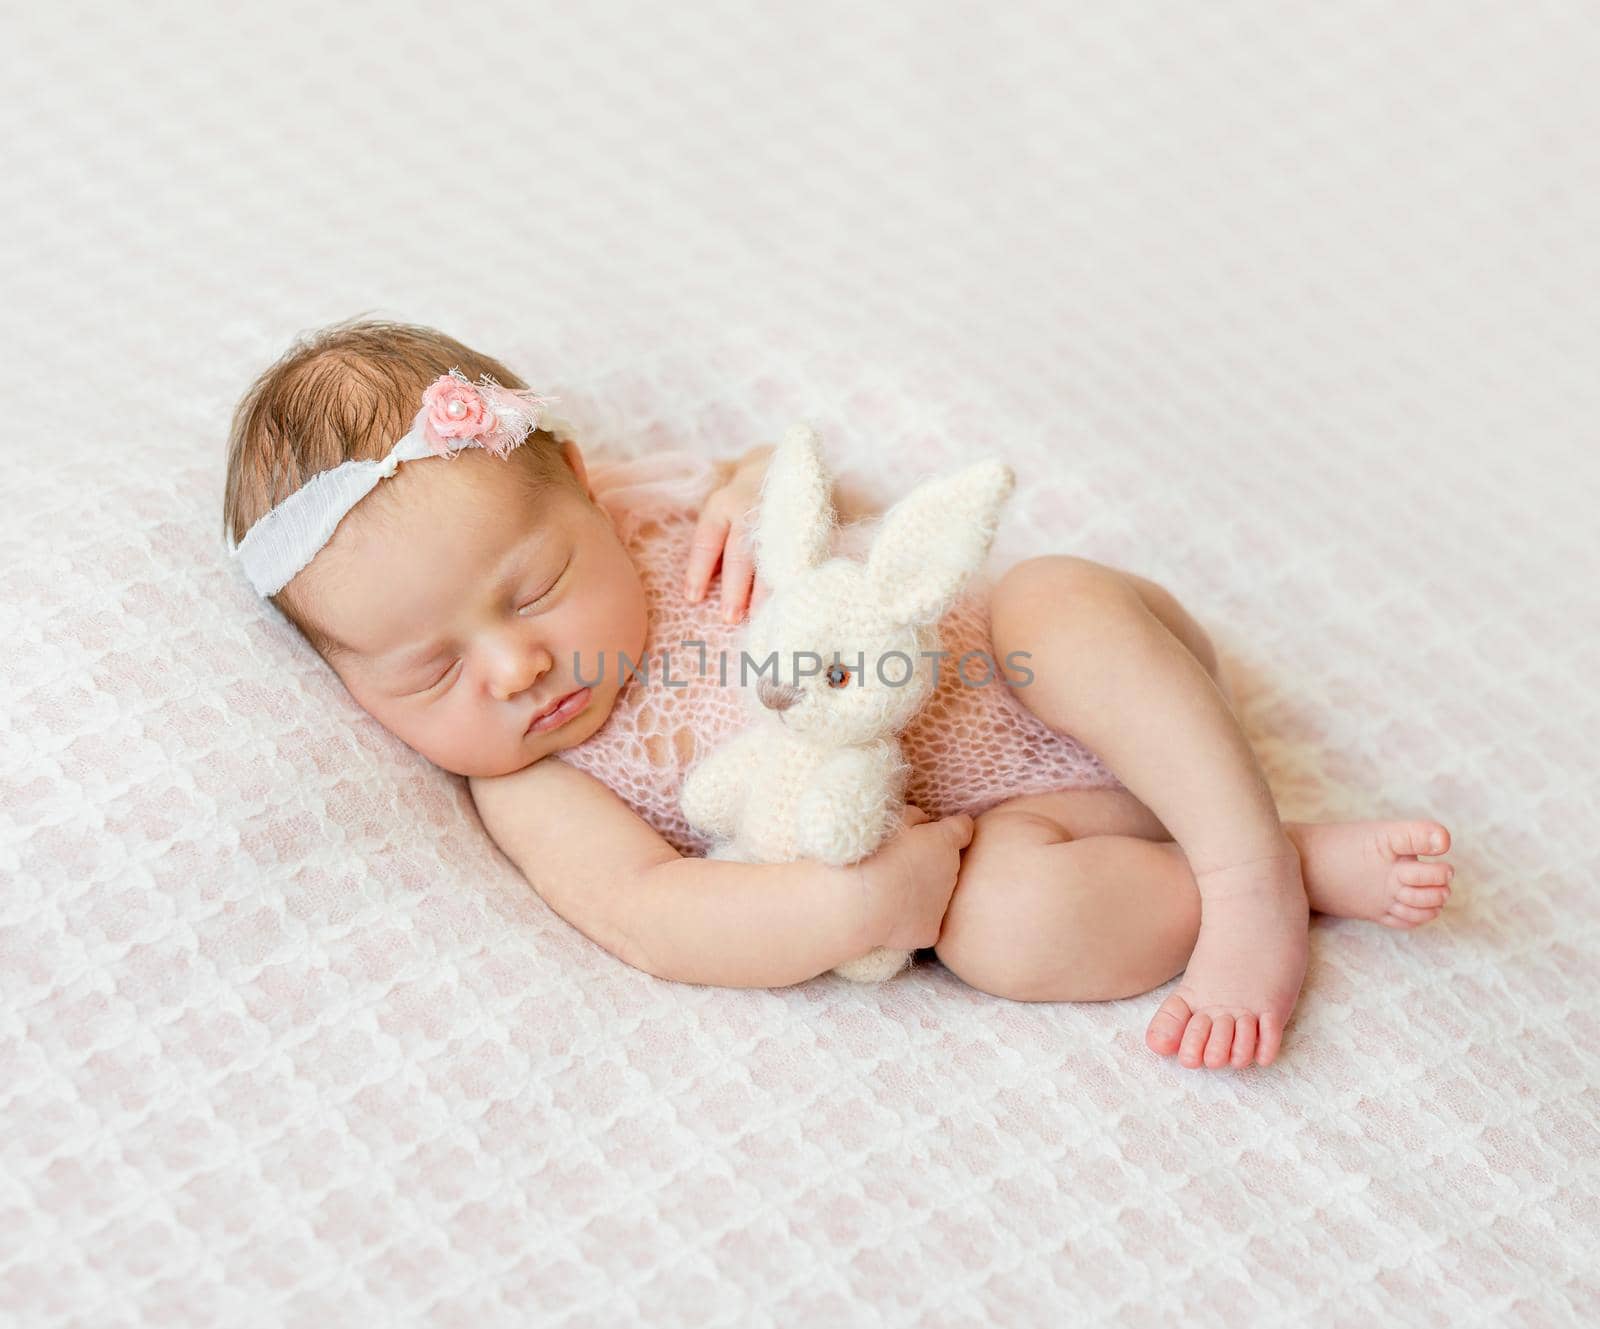 sleeping newborn girl with headband and holding toy by tan4ikk1